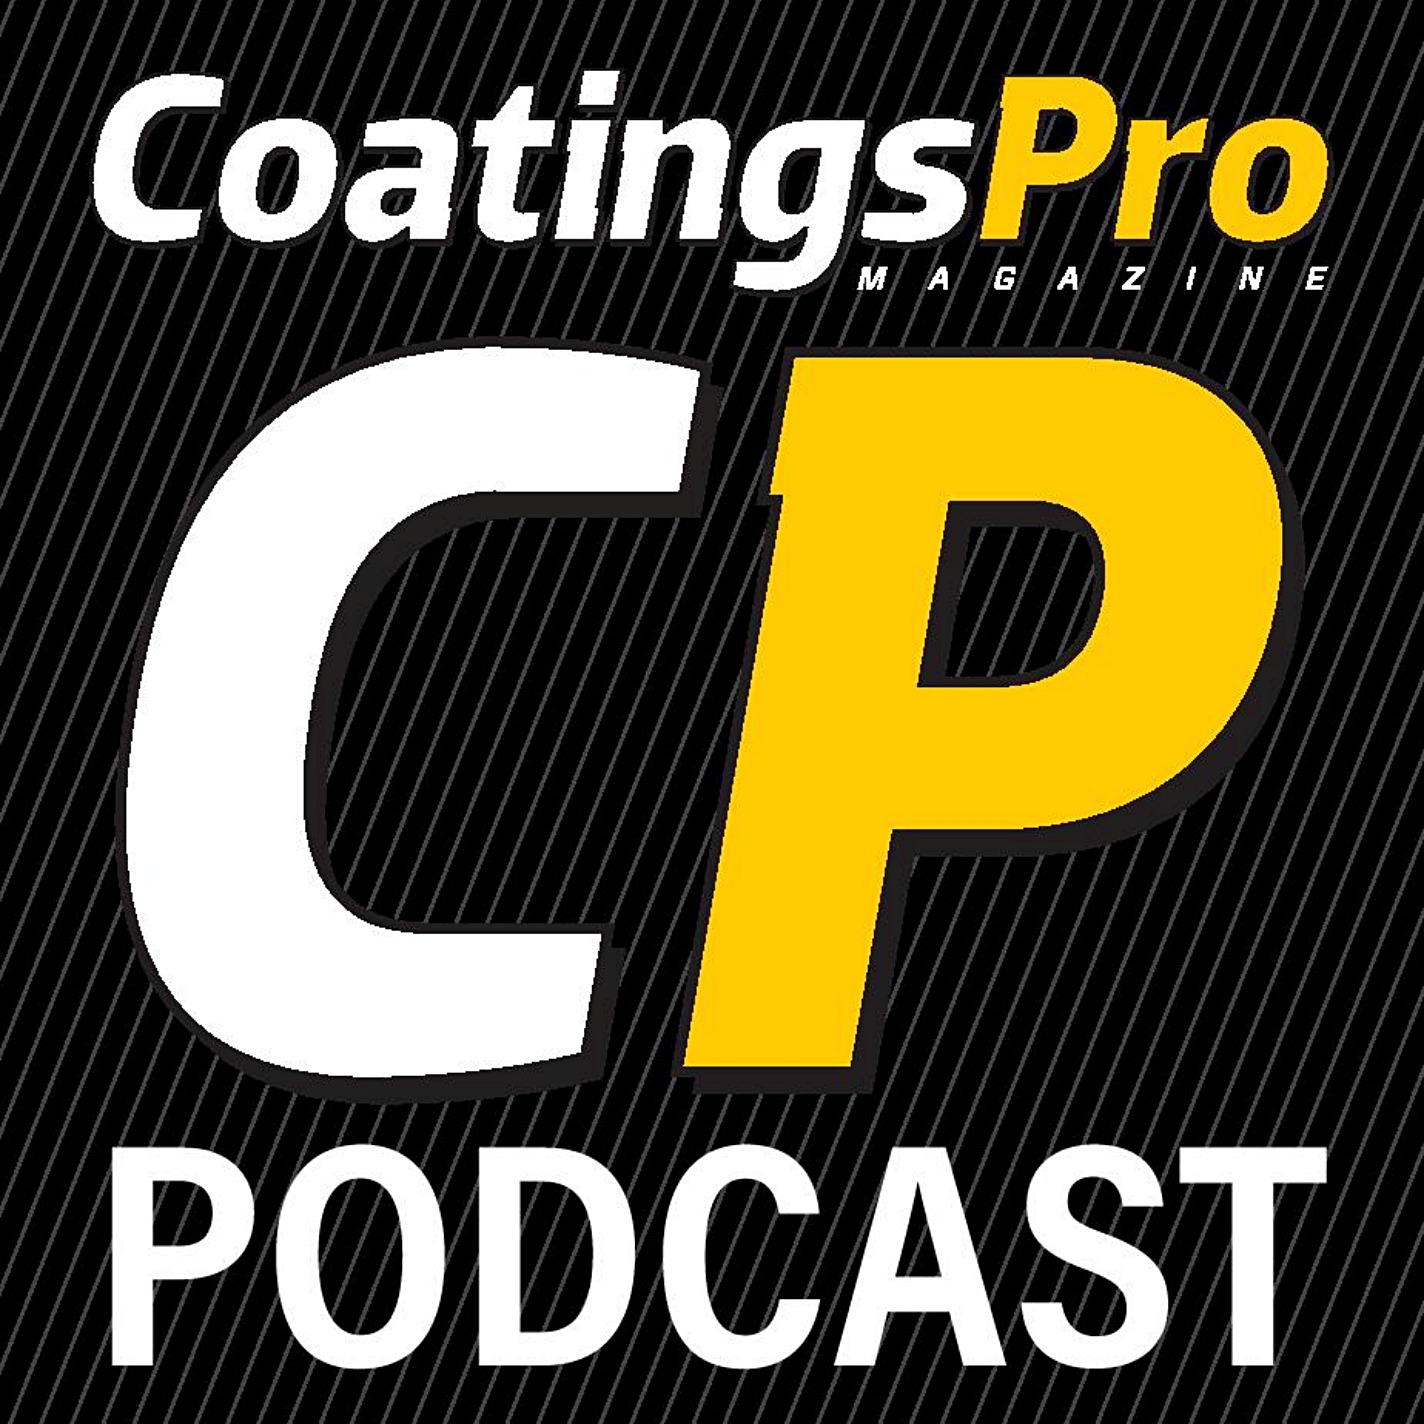 CoatingsPro Interview Series